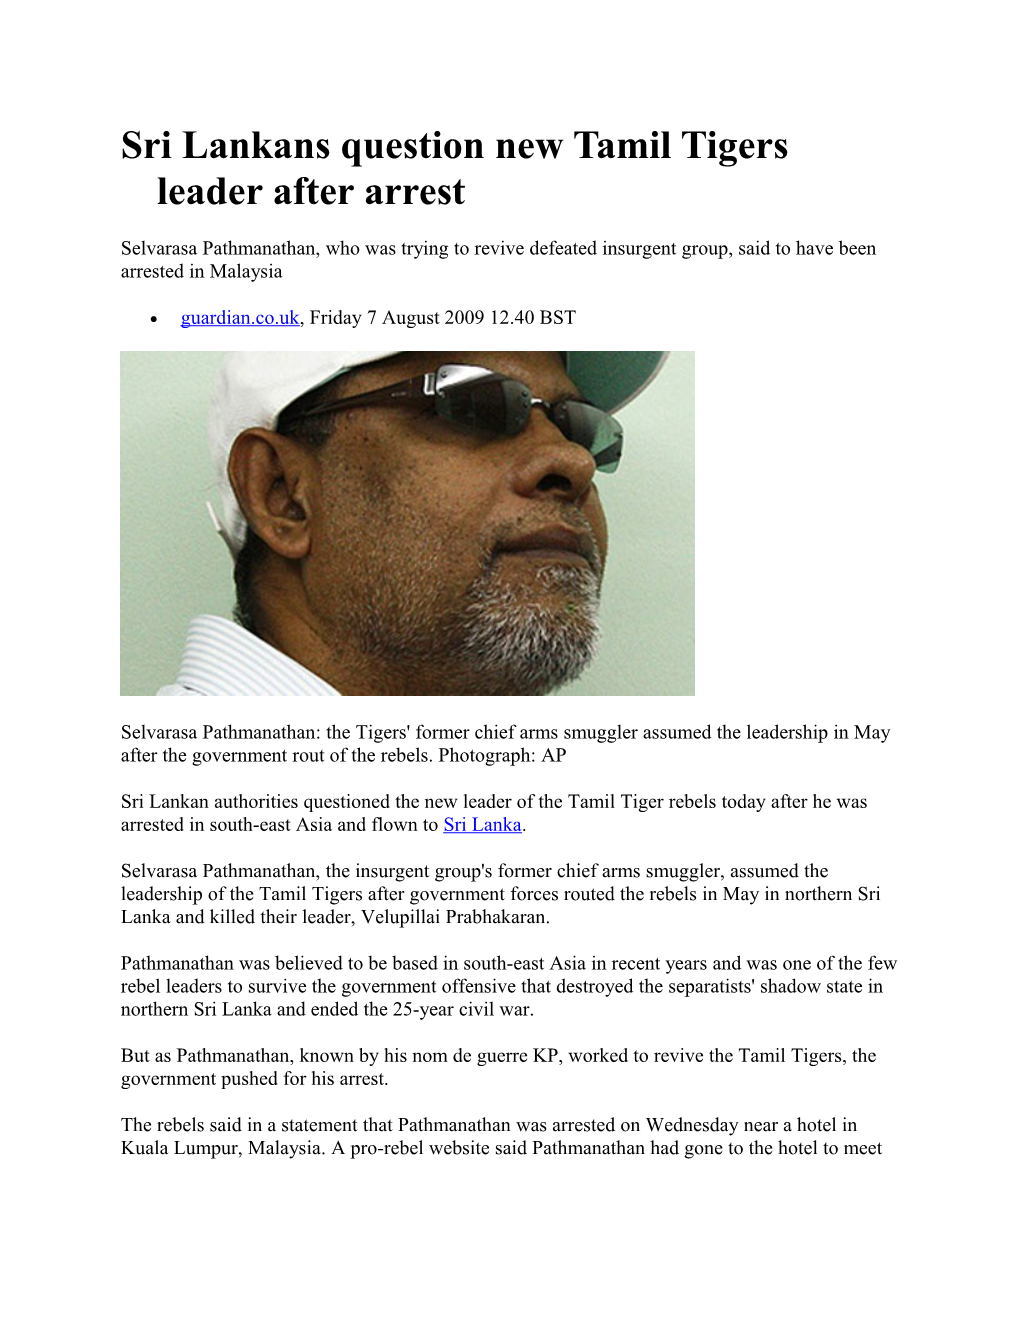 Sri Lankans Question New Tamil Tigers Leader After Arrest